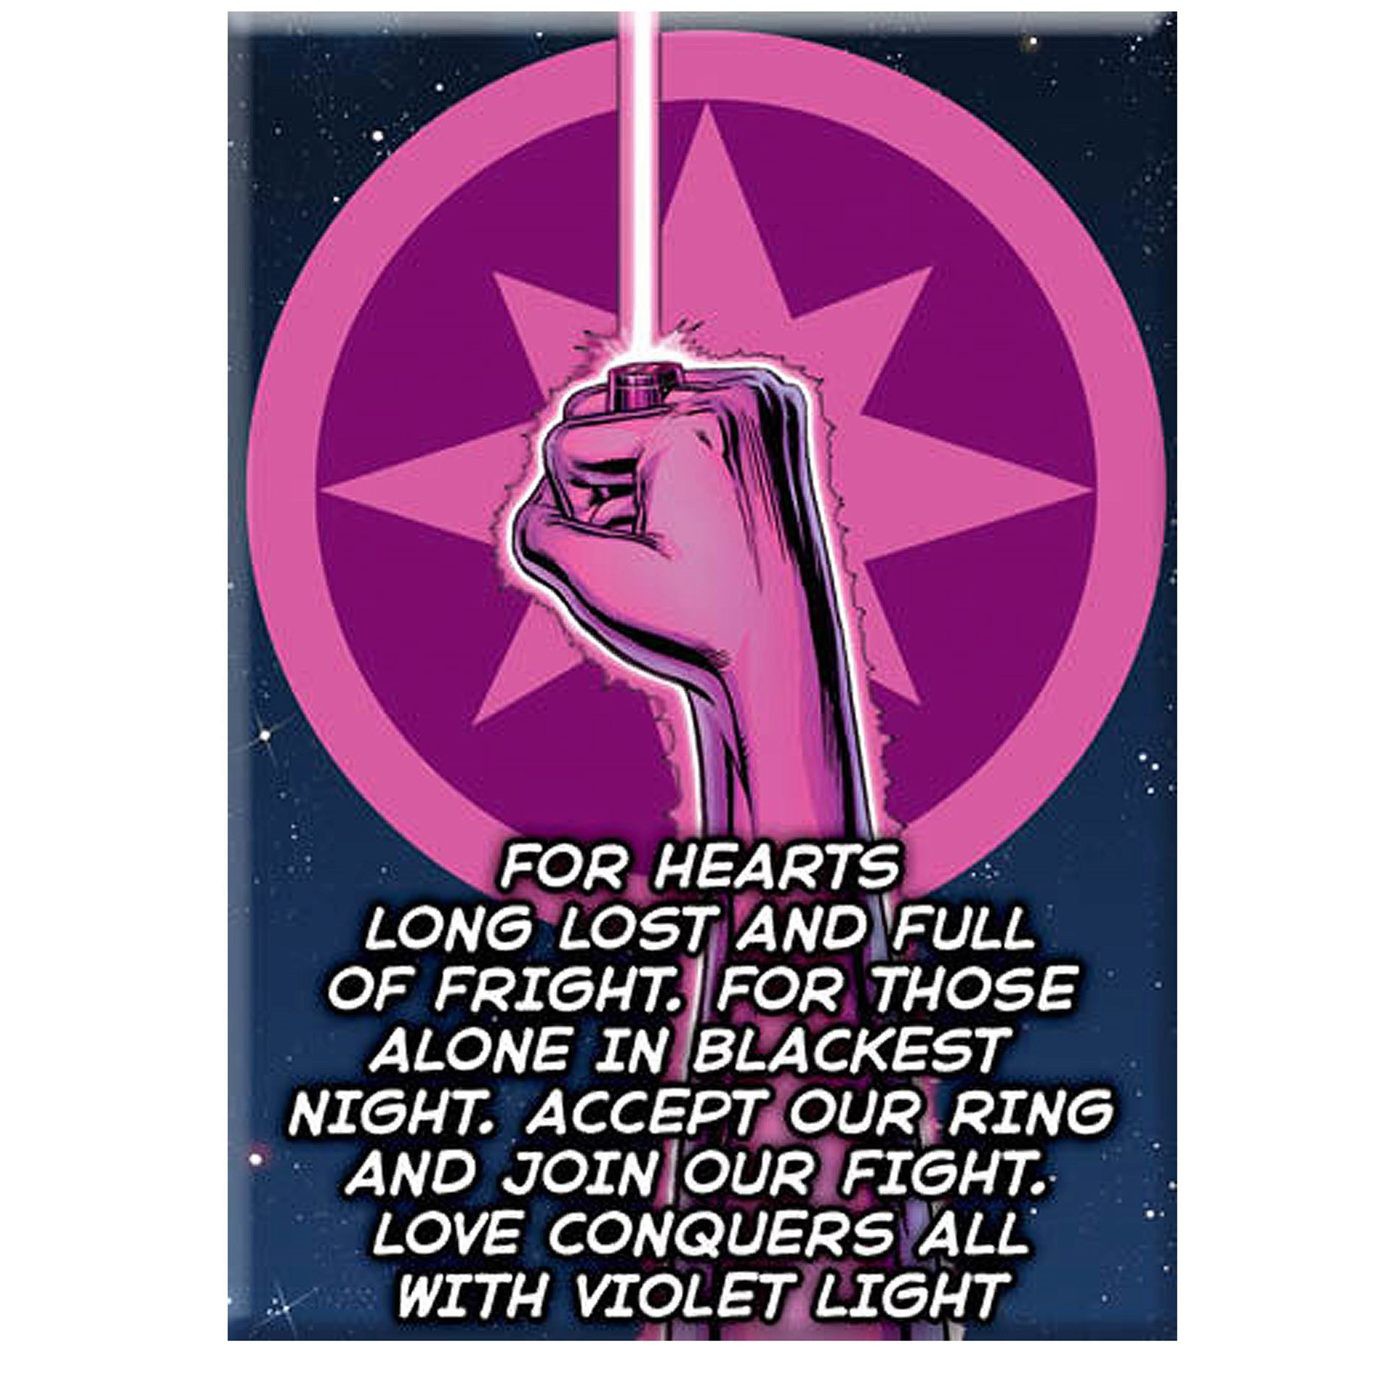 Included is the Violet Lantern Oath, spoken by.